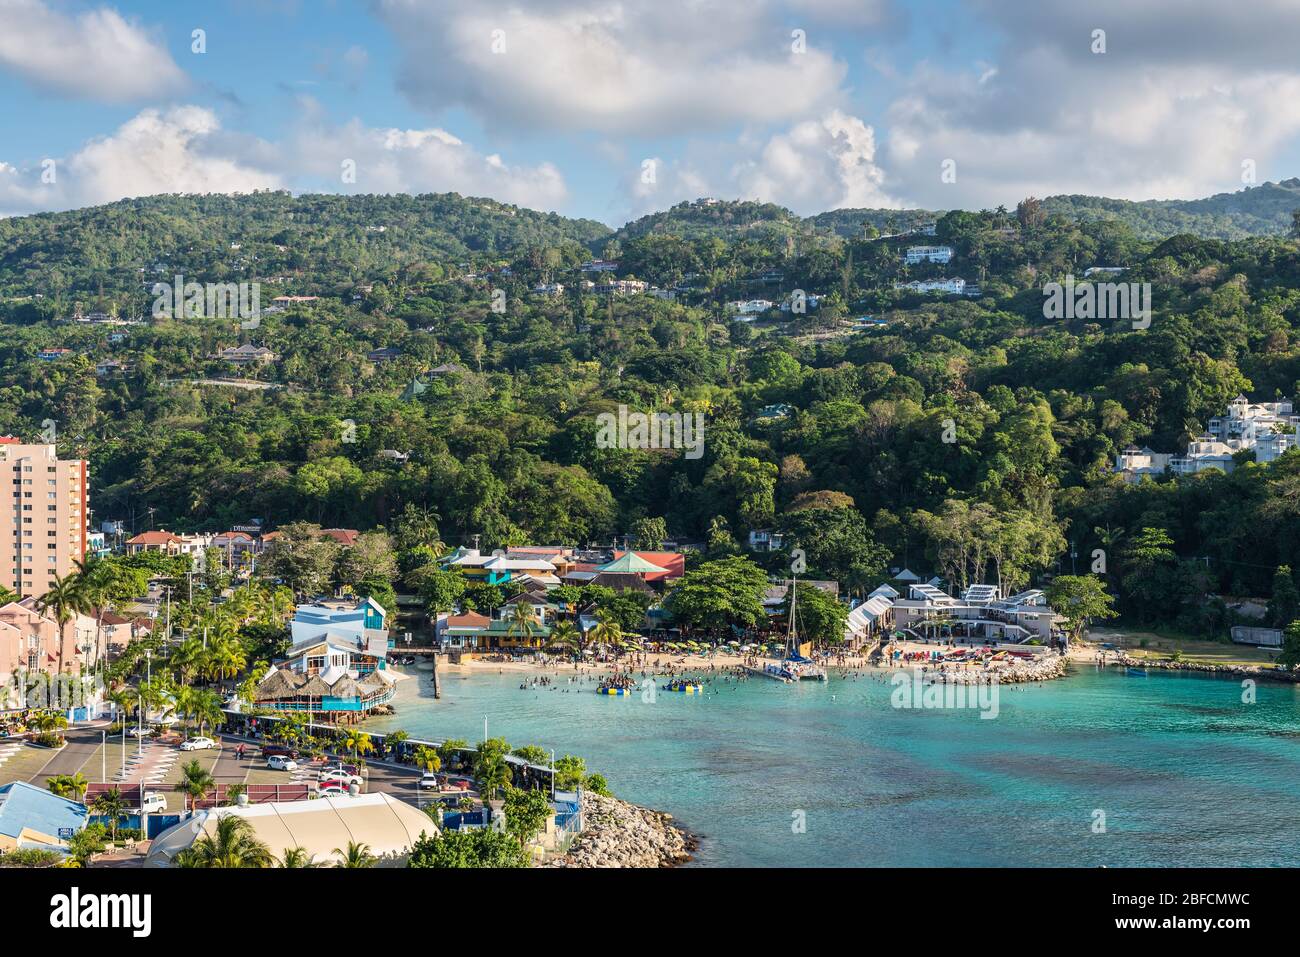 Ocho Rios, Jamaica - April 22, 2019: View from the ship to the Fisherman's Beach in the tropical Caribbean island of Ocho Rios, Jamaica. Cruise termin Stock Photo